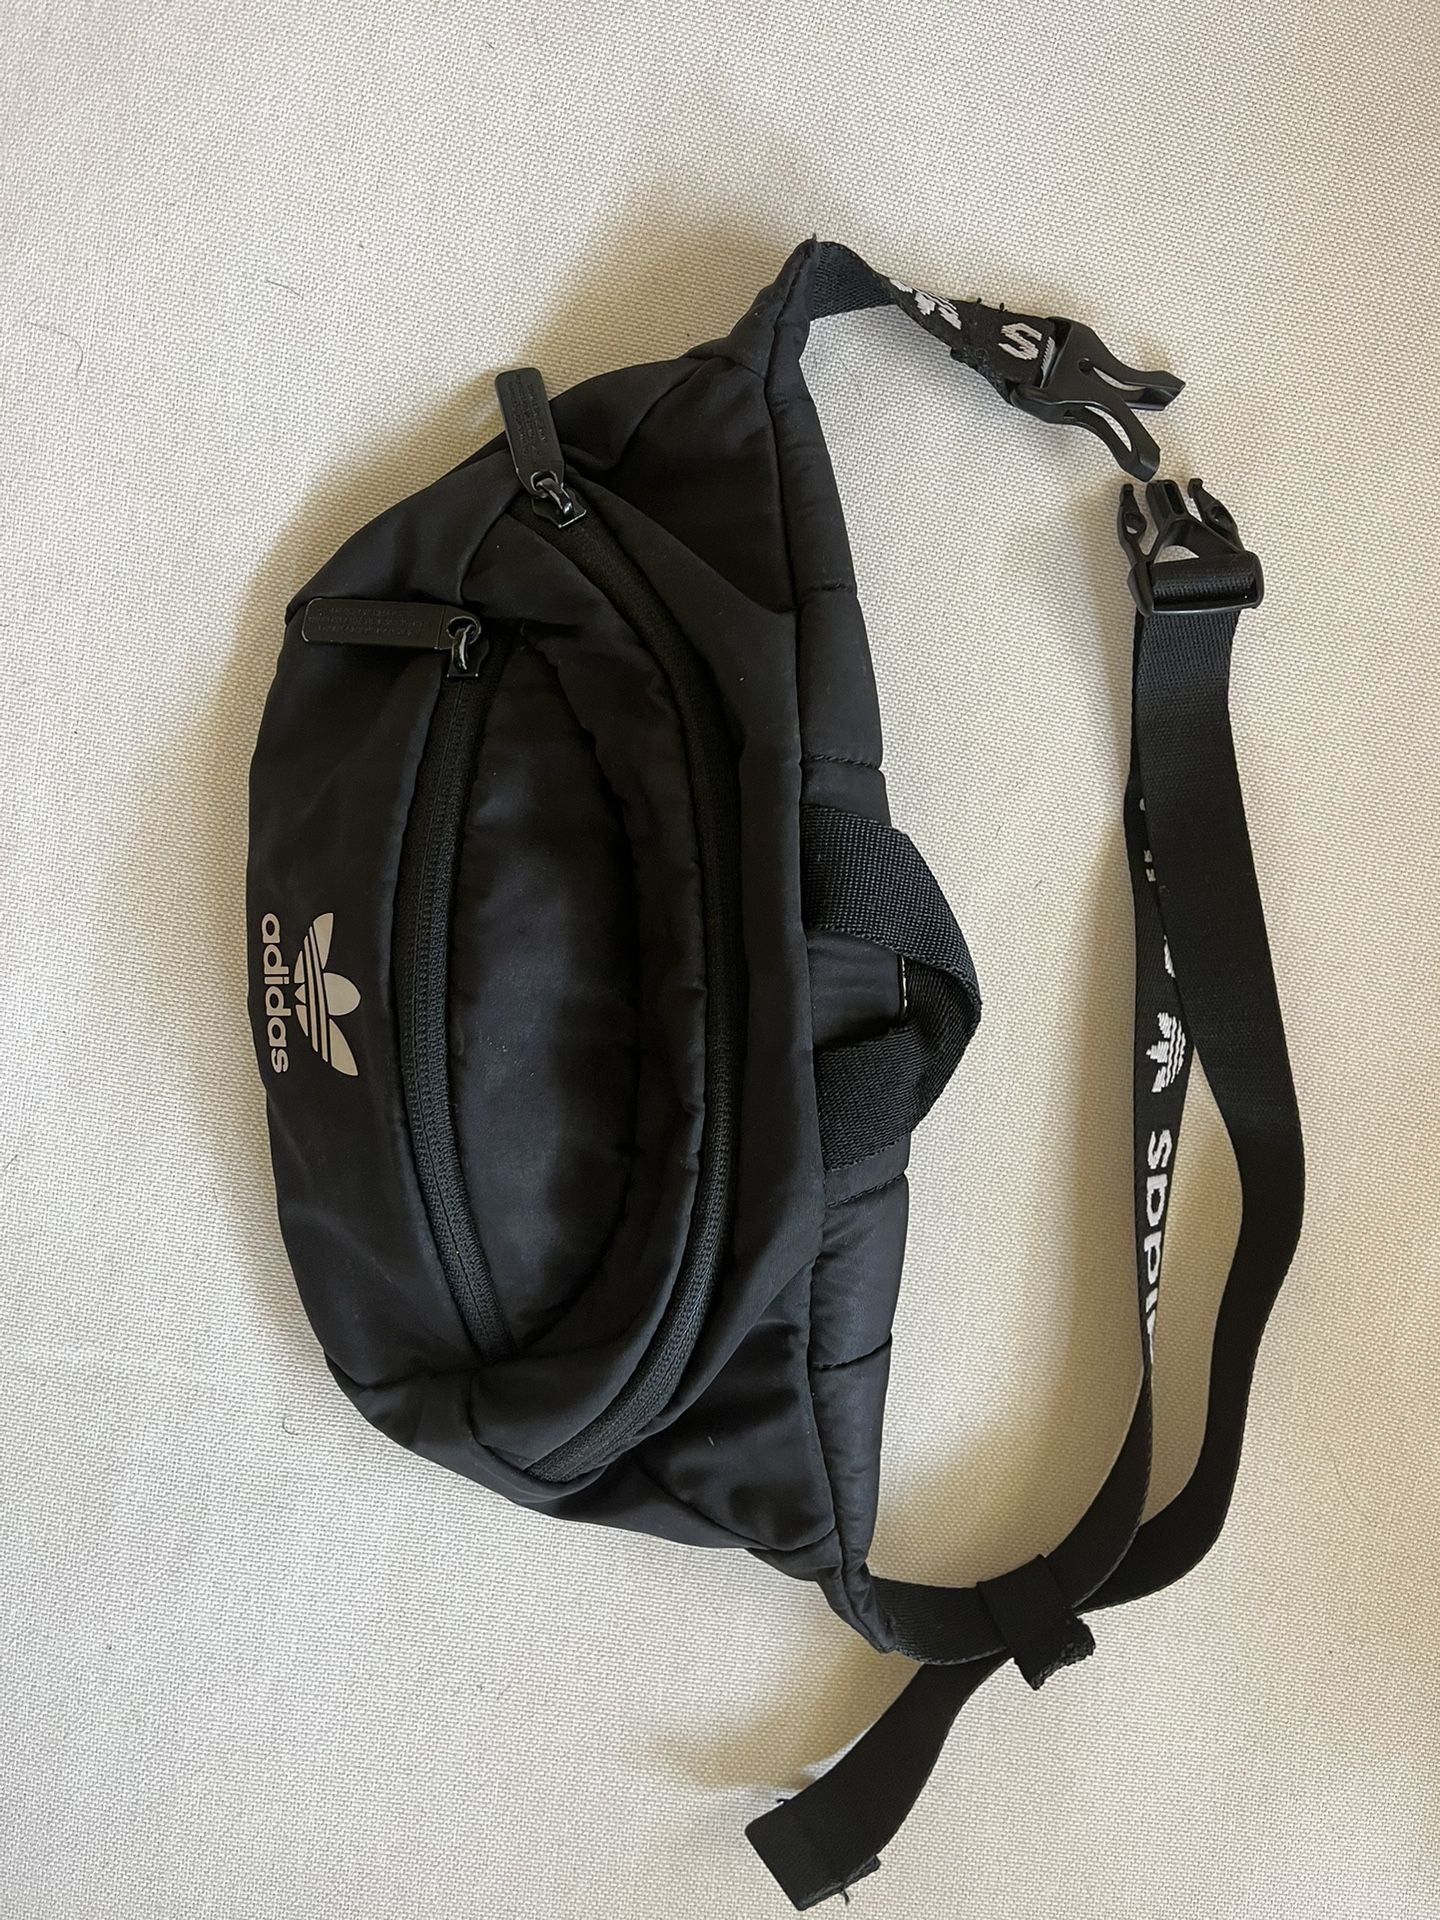 Adidas Originals National Waist Bag/Fanny Pack Black/White Unisex